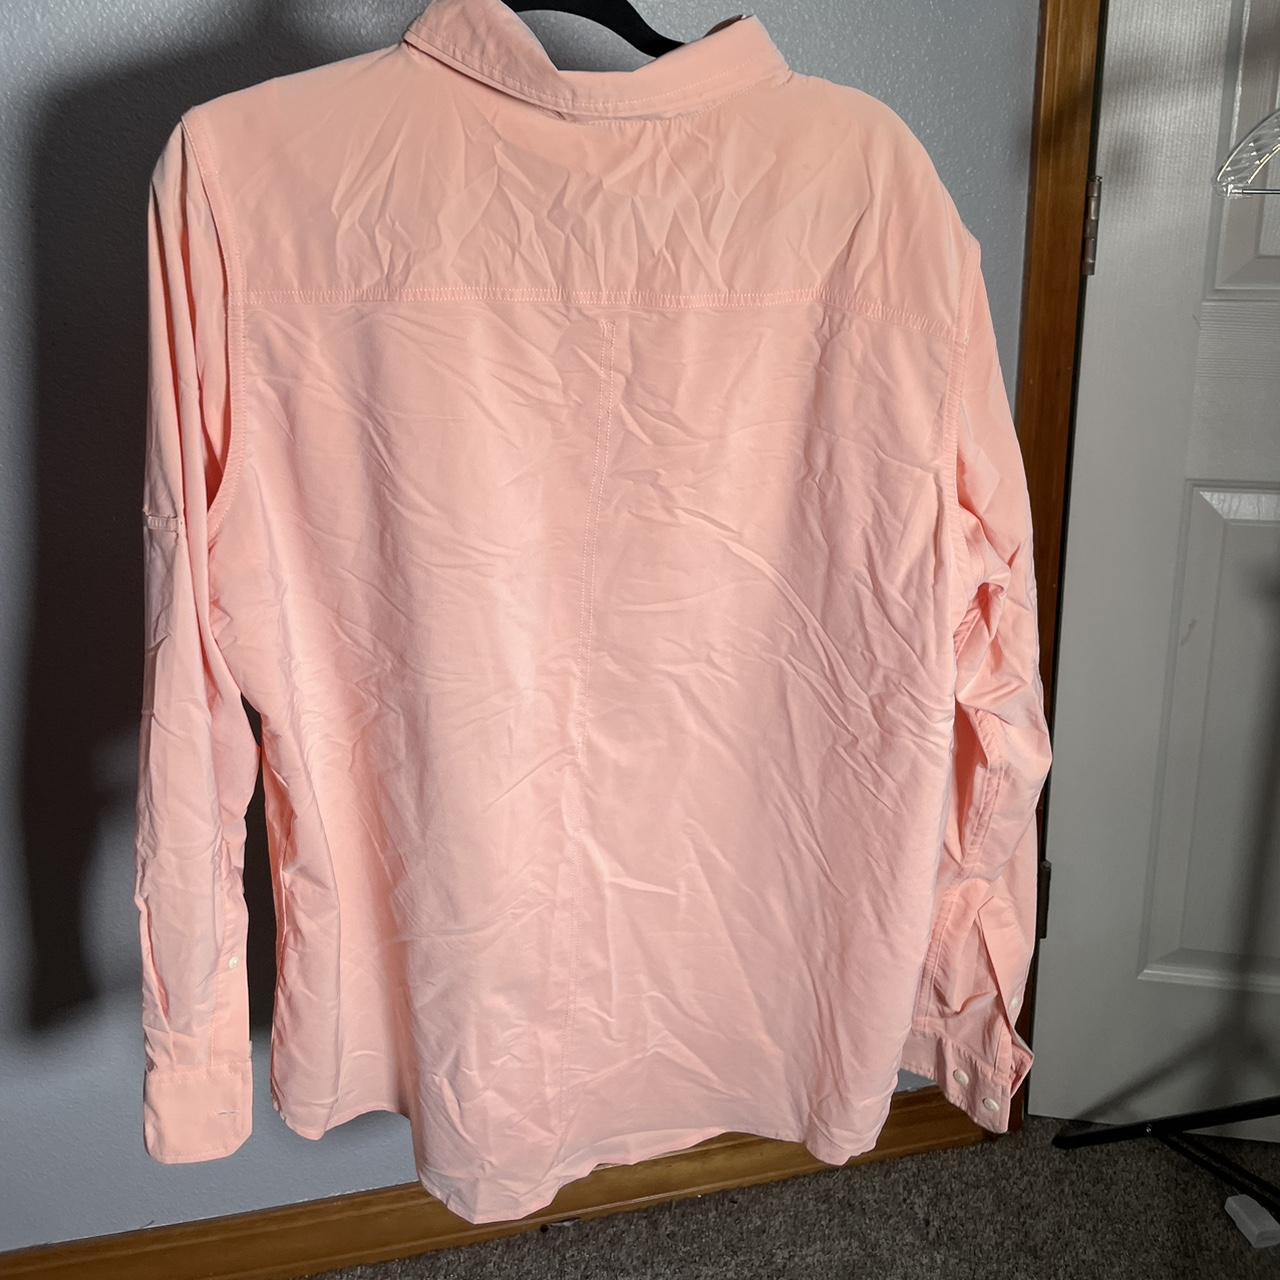 ExOfficio Men's Pink and Orange Shirt (2)